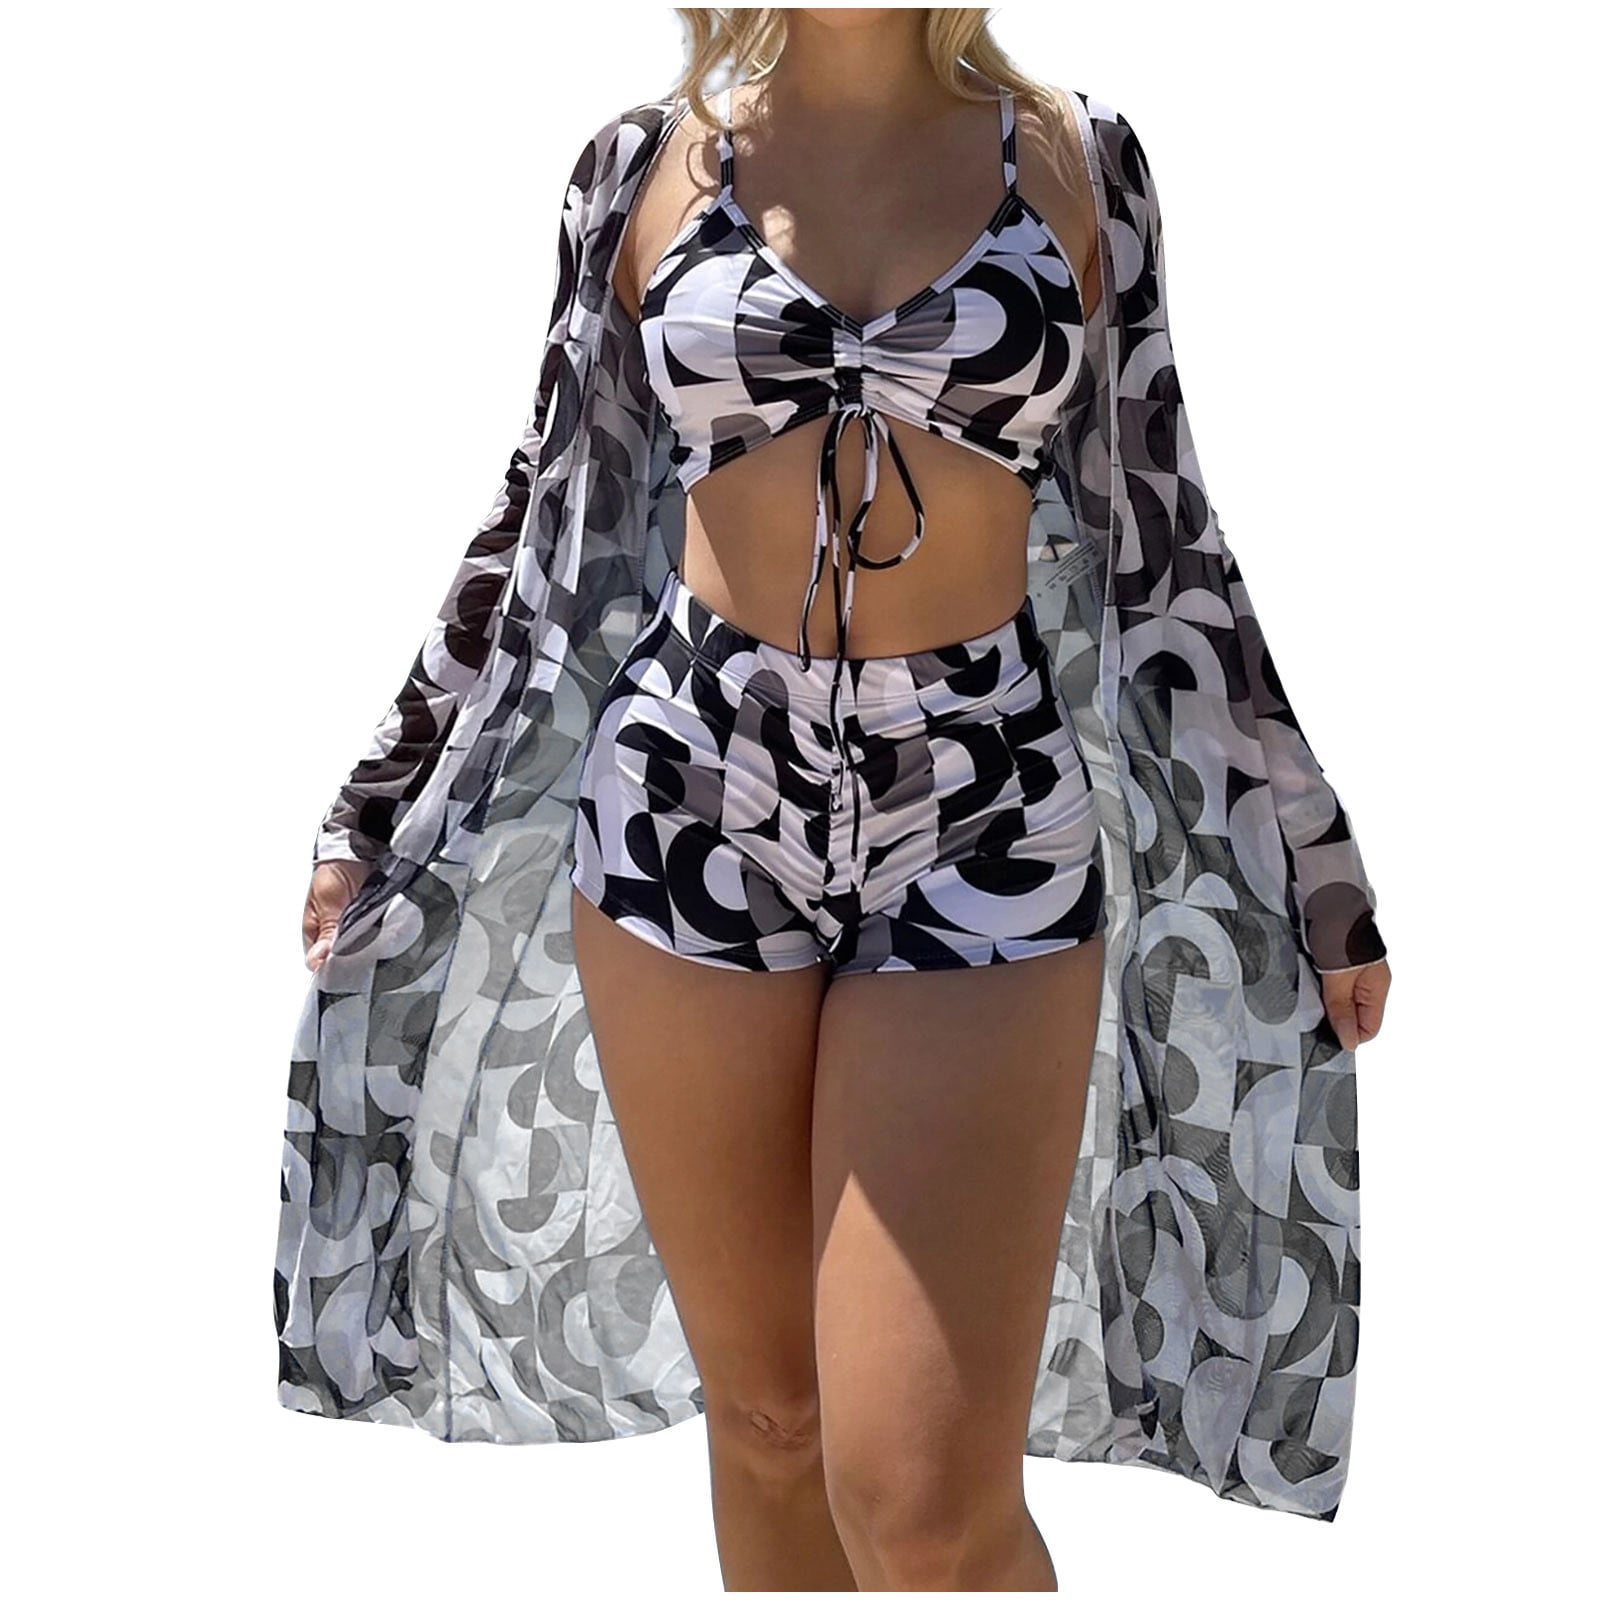 Lolmot Women's Summer Casual Halter Top Bathing Suit Printed 3 Pieces High  Waist Bikini Maxi Swimsuit Cover up,Bathing Suit for Women for Swimming